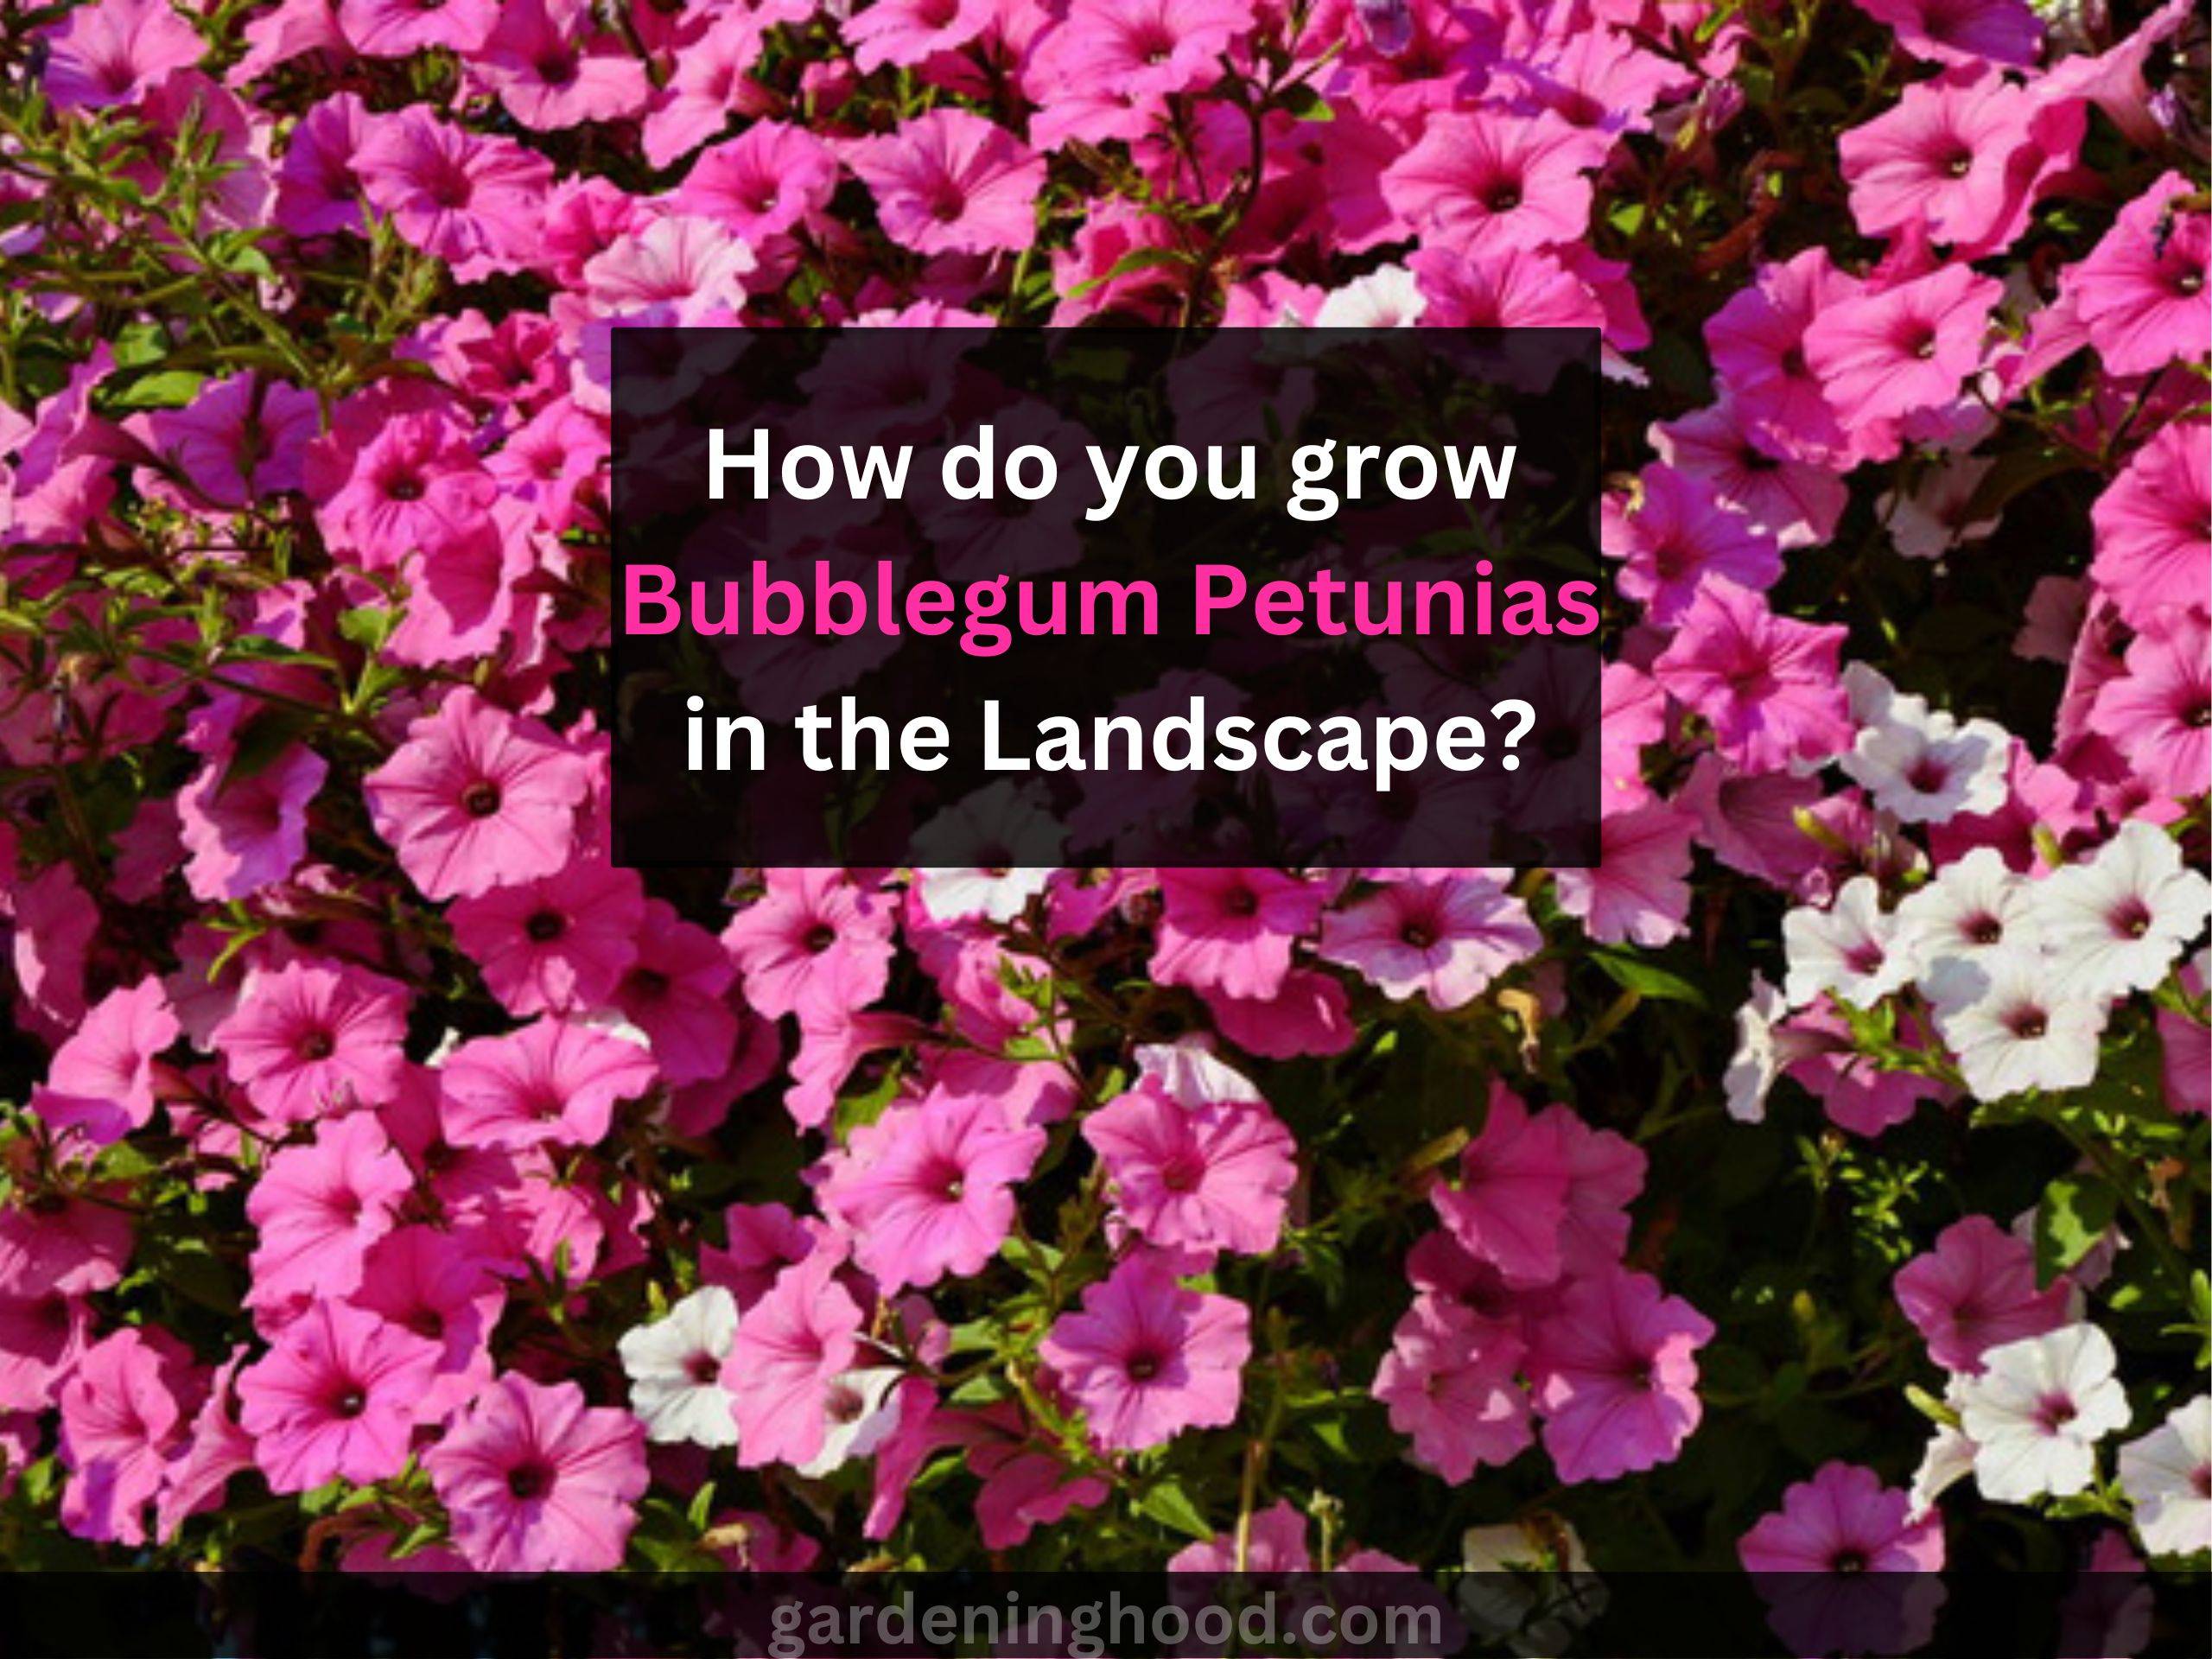 How do you grow Bubblegum Petunias in the Landscape?